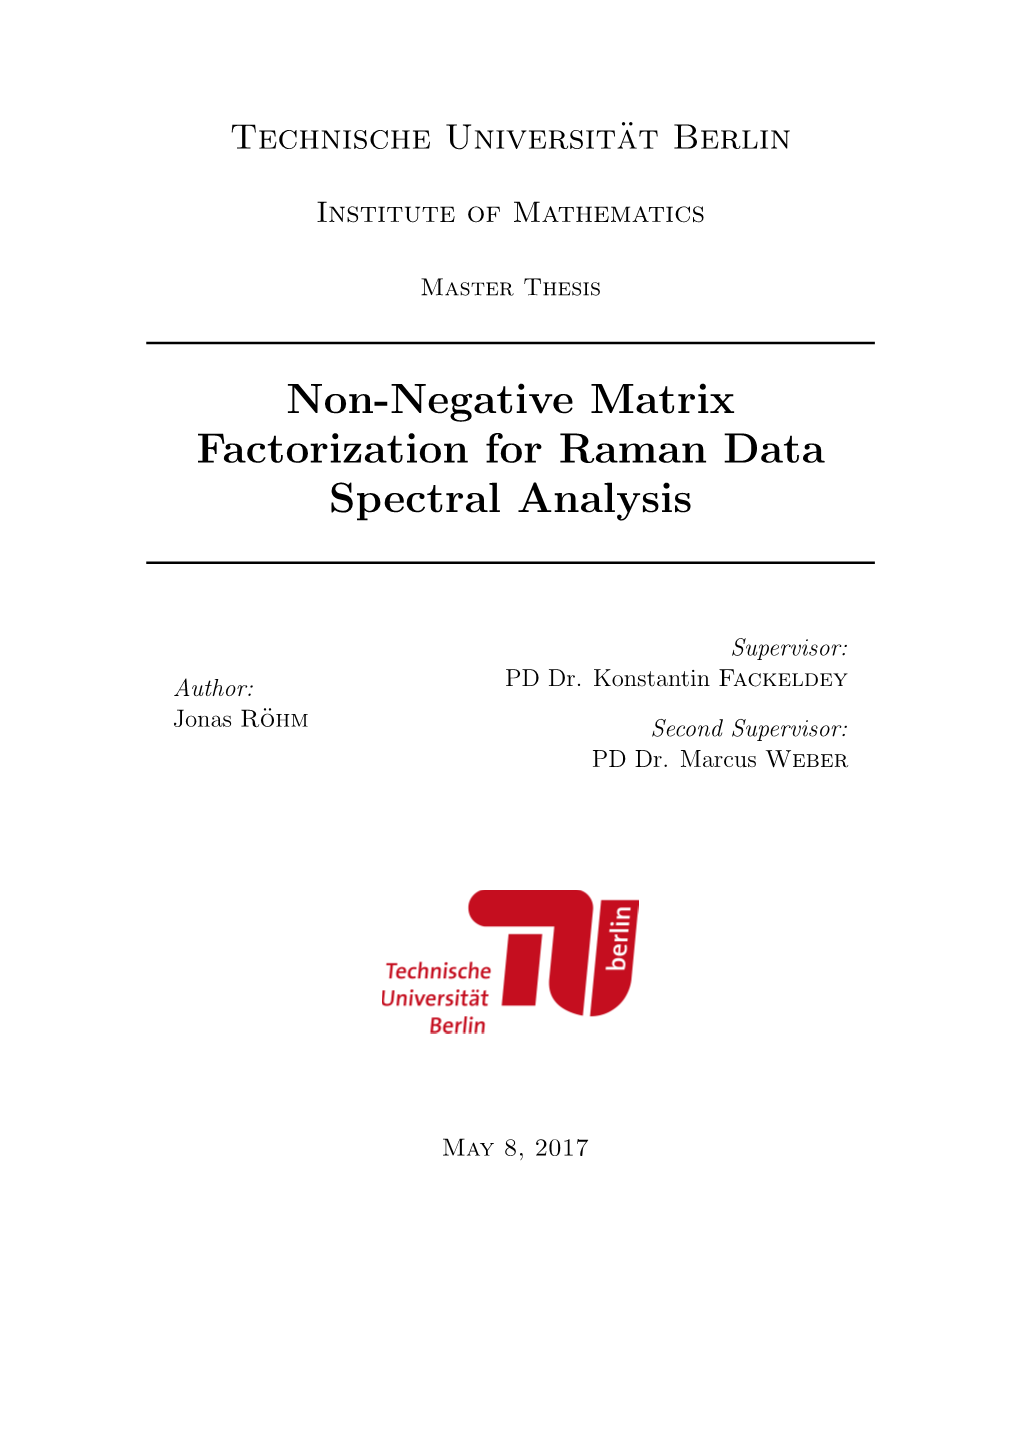 Non-Negative Matrix Factorization for Raman Data Spectral Analysis